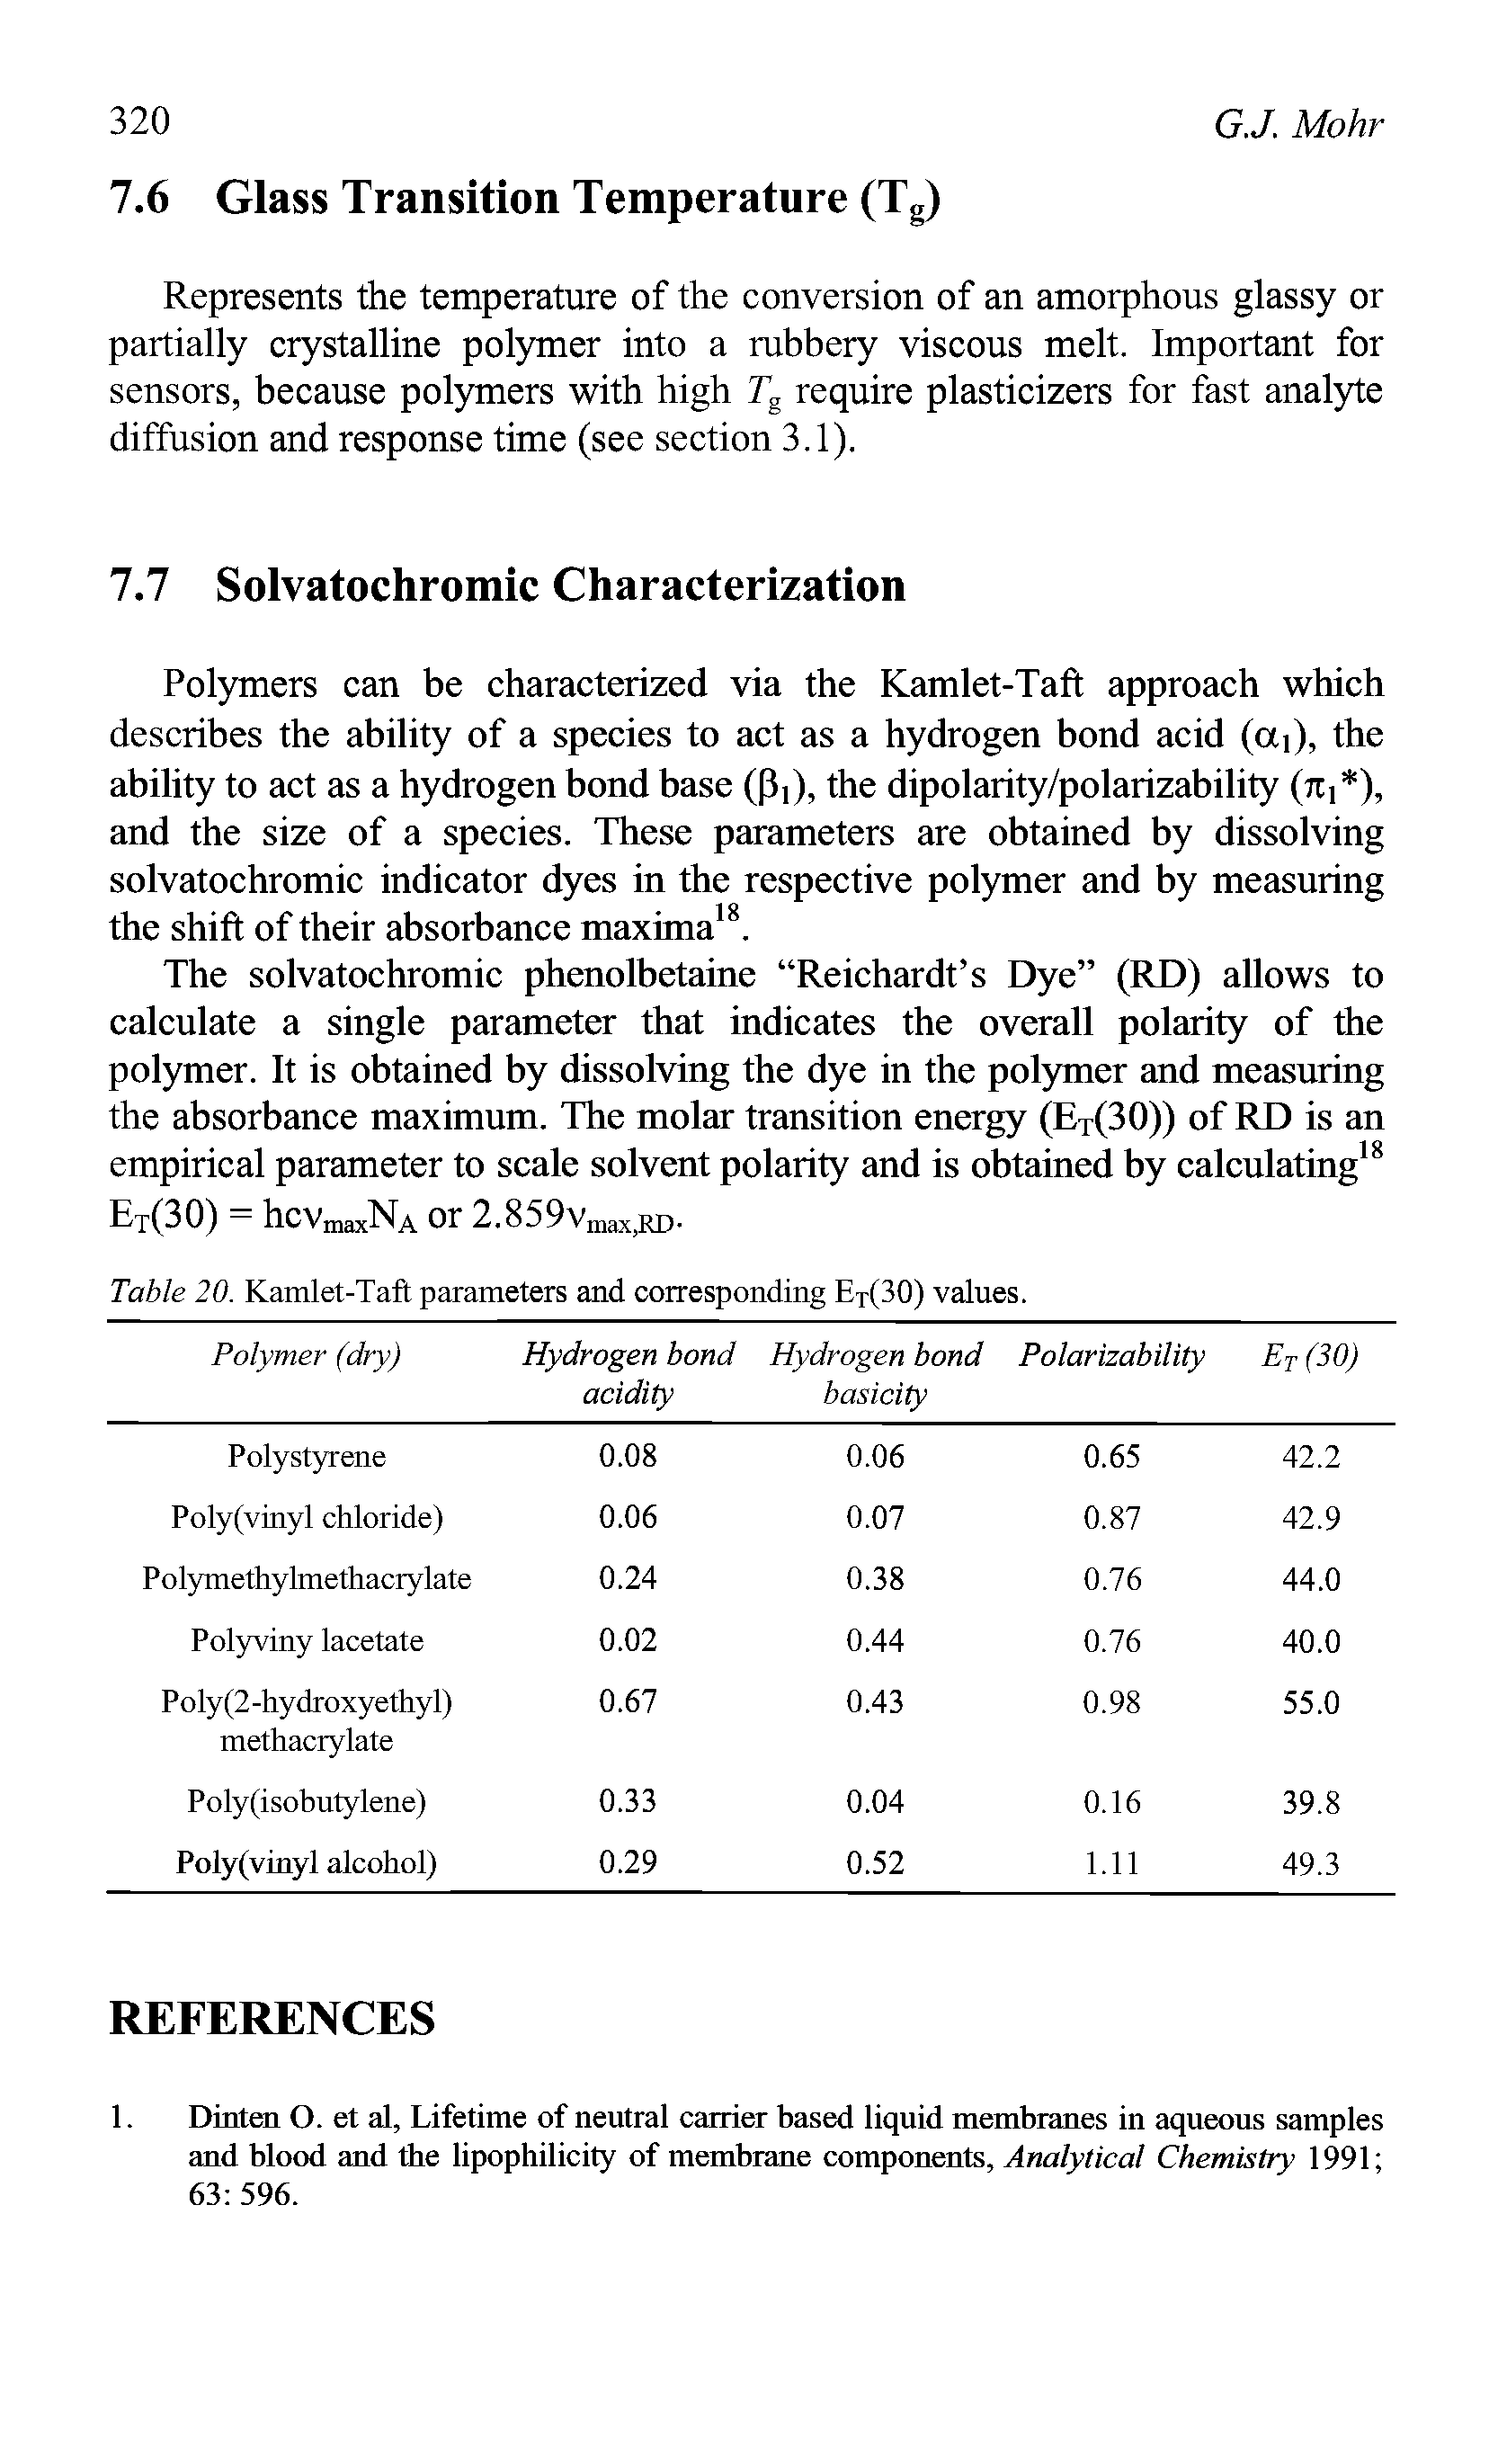 Table 20. Kamlet-Taft parameters and corresponding ET(30) values.